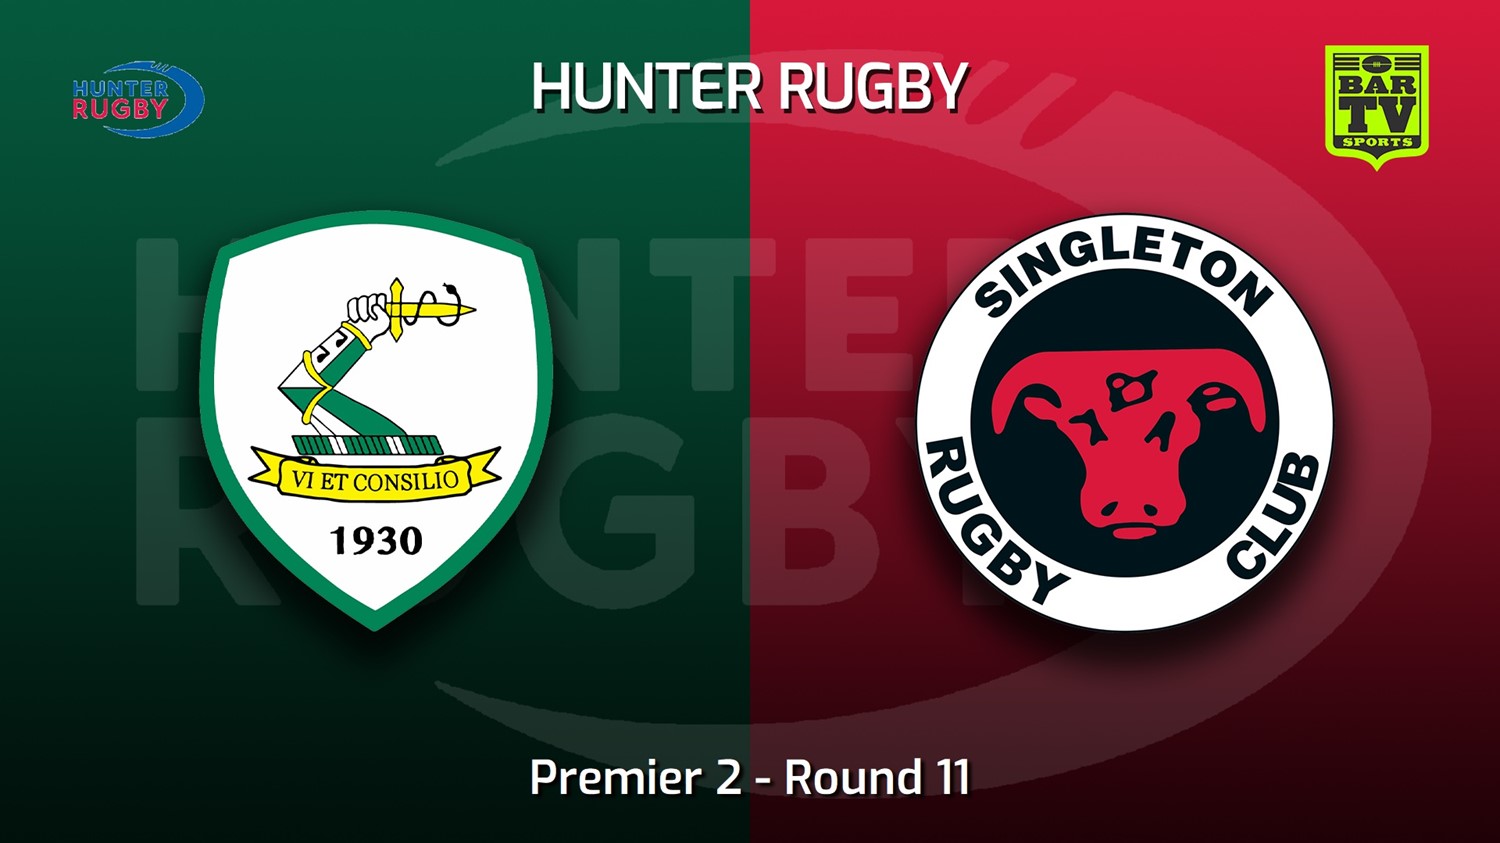 220709-Hunter Rugby Round 11 - Premier 2 - Merewether Carlton v Singleton Bulls Slate Image